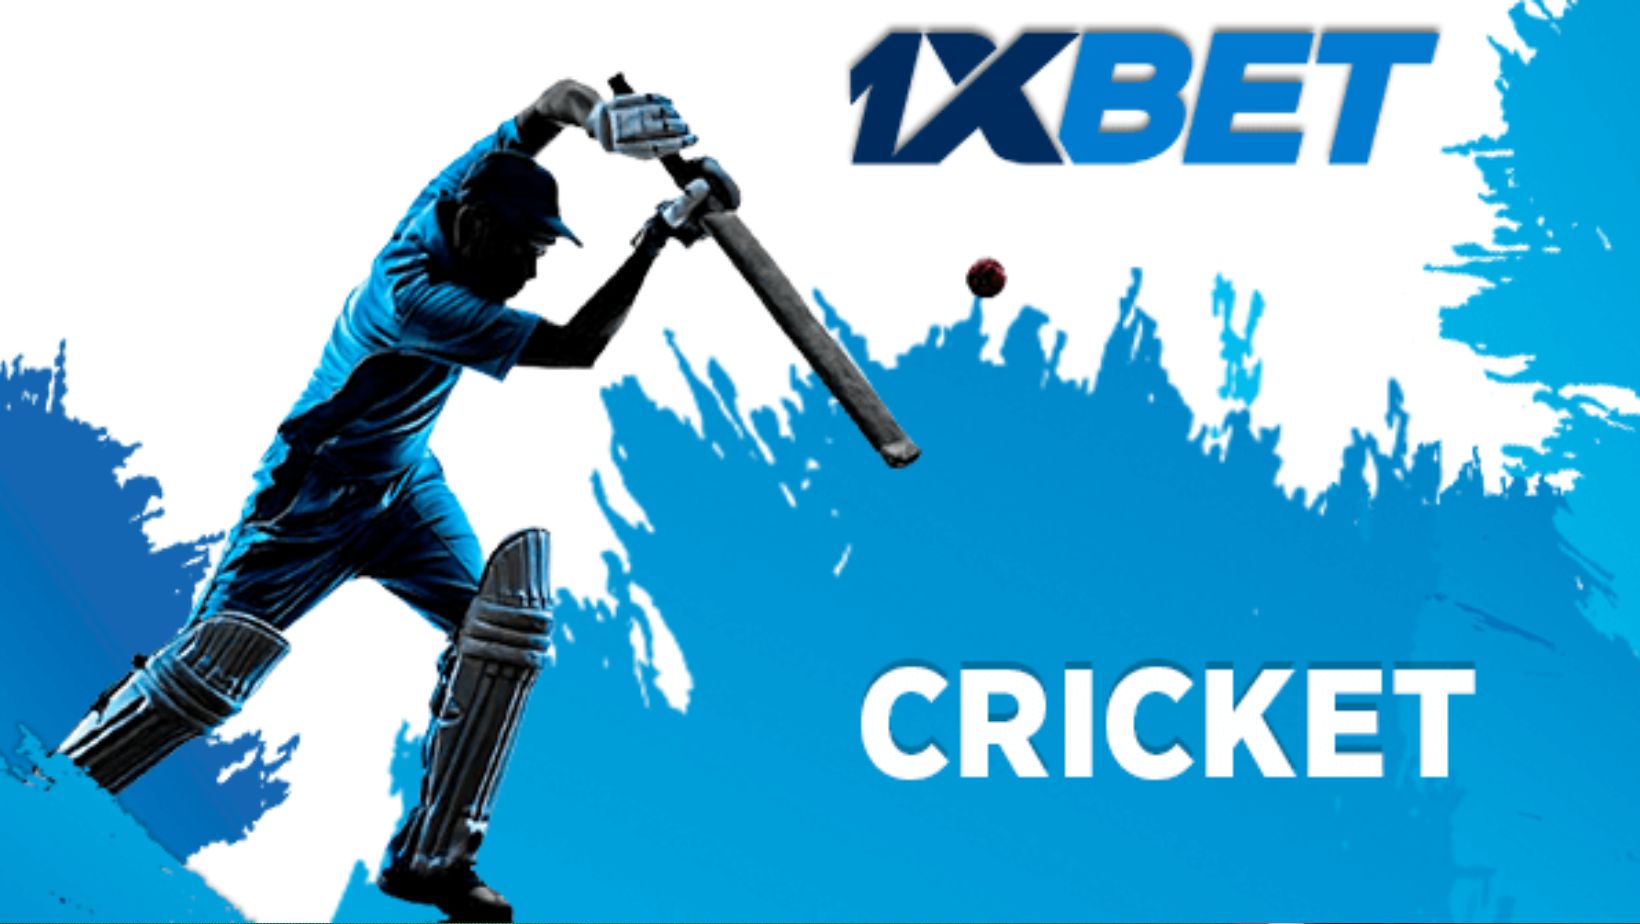 Most Popular 1xBet Cricket Tournaments